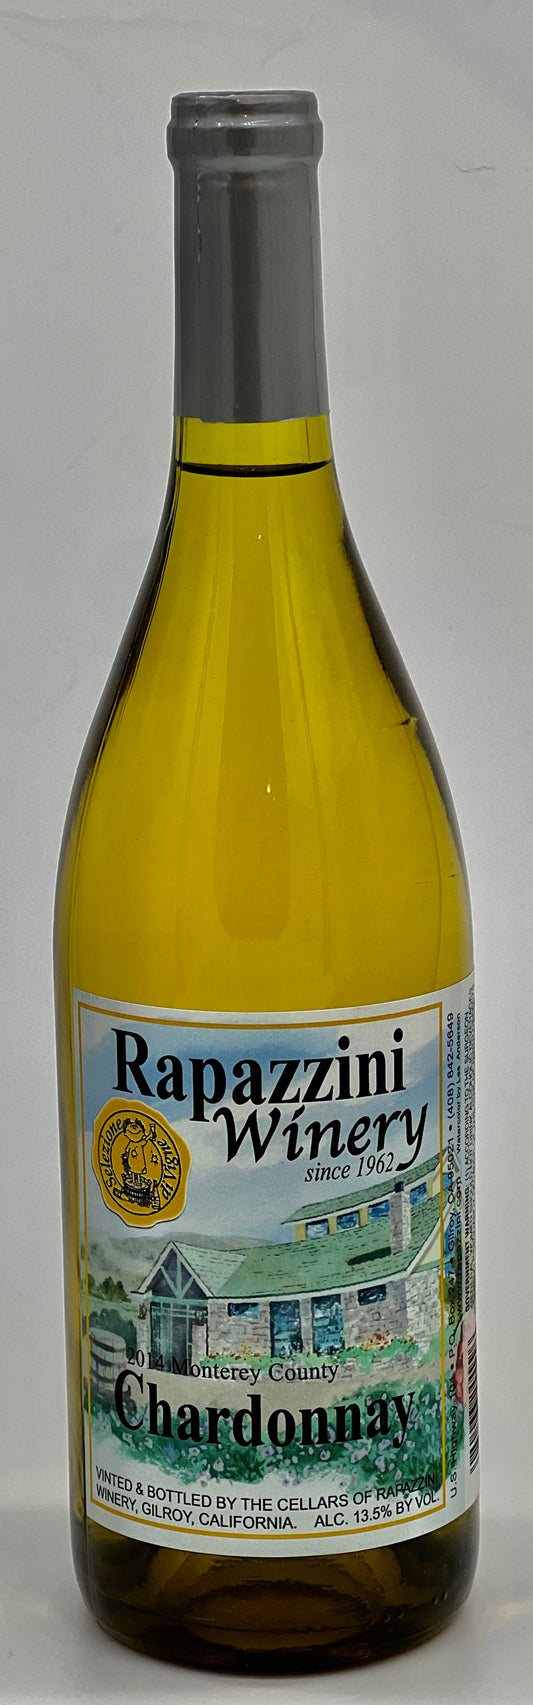 Chardonnay Monterey County 2014 Rapazzini.Vino 750 ml 25 oz 13.5% alcohol $24